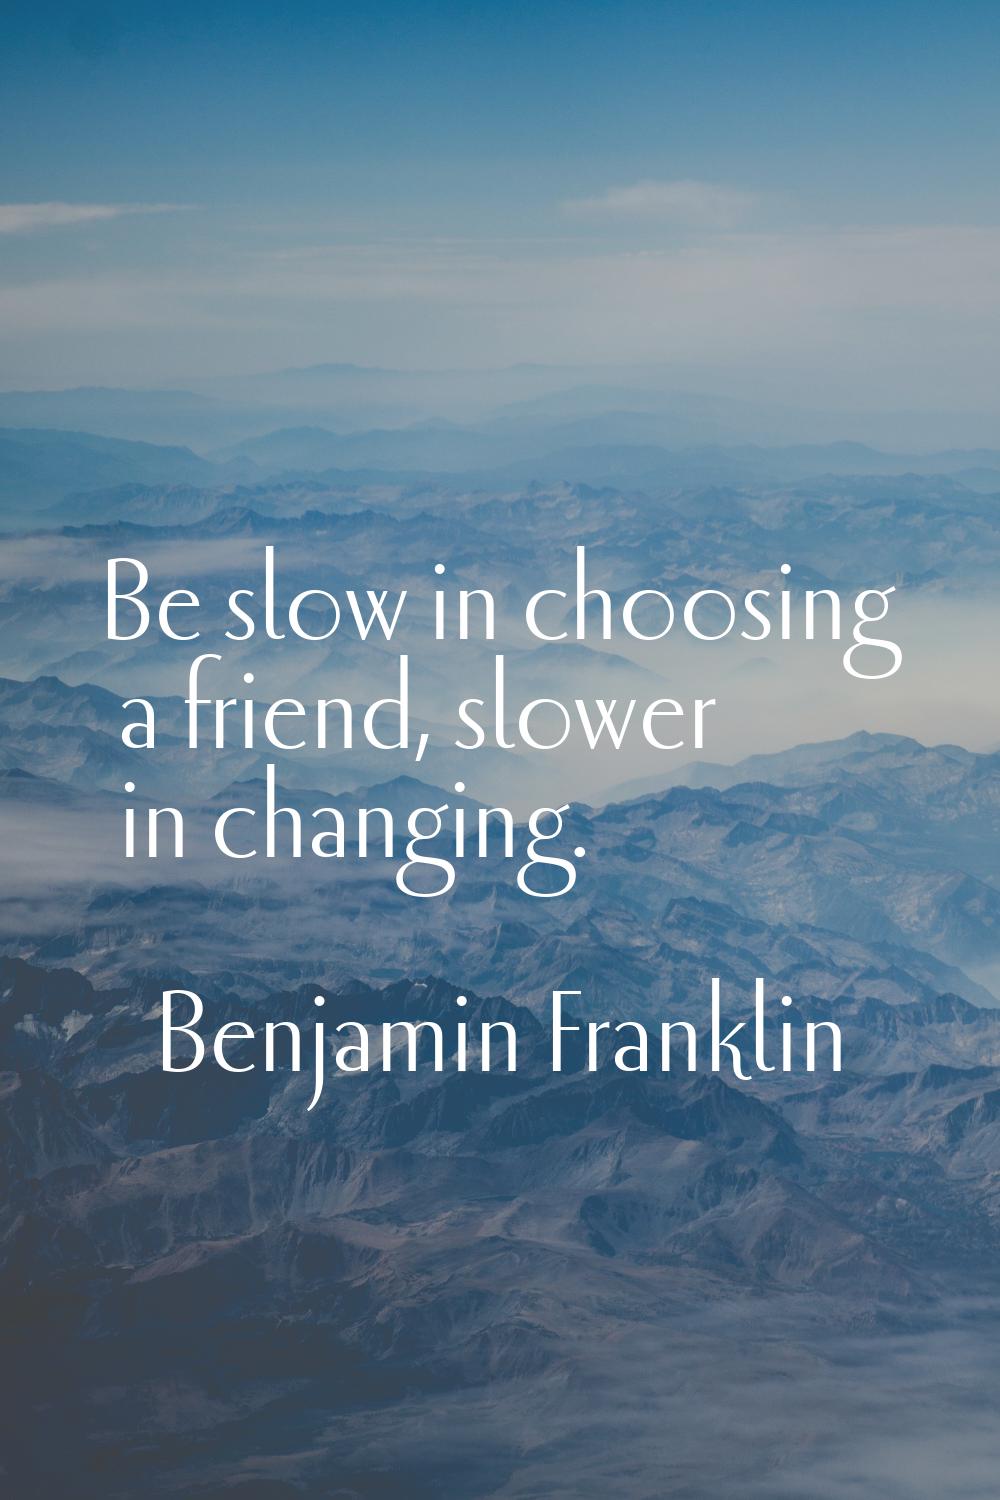 Be slow in choosing a friend, slower in changing.